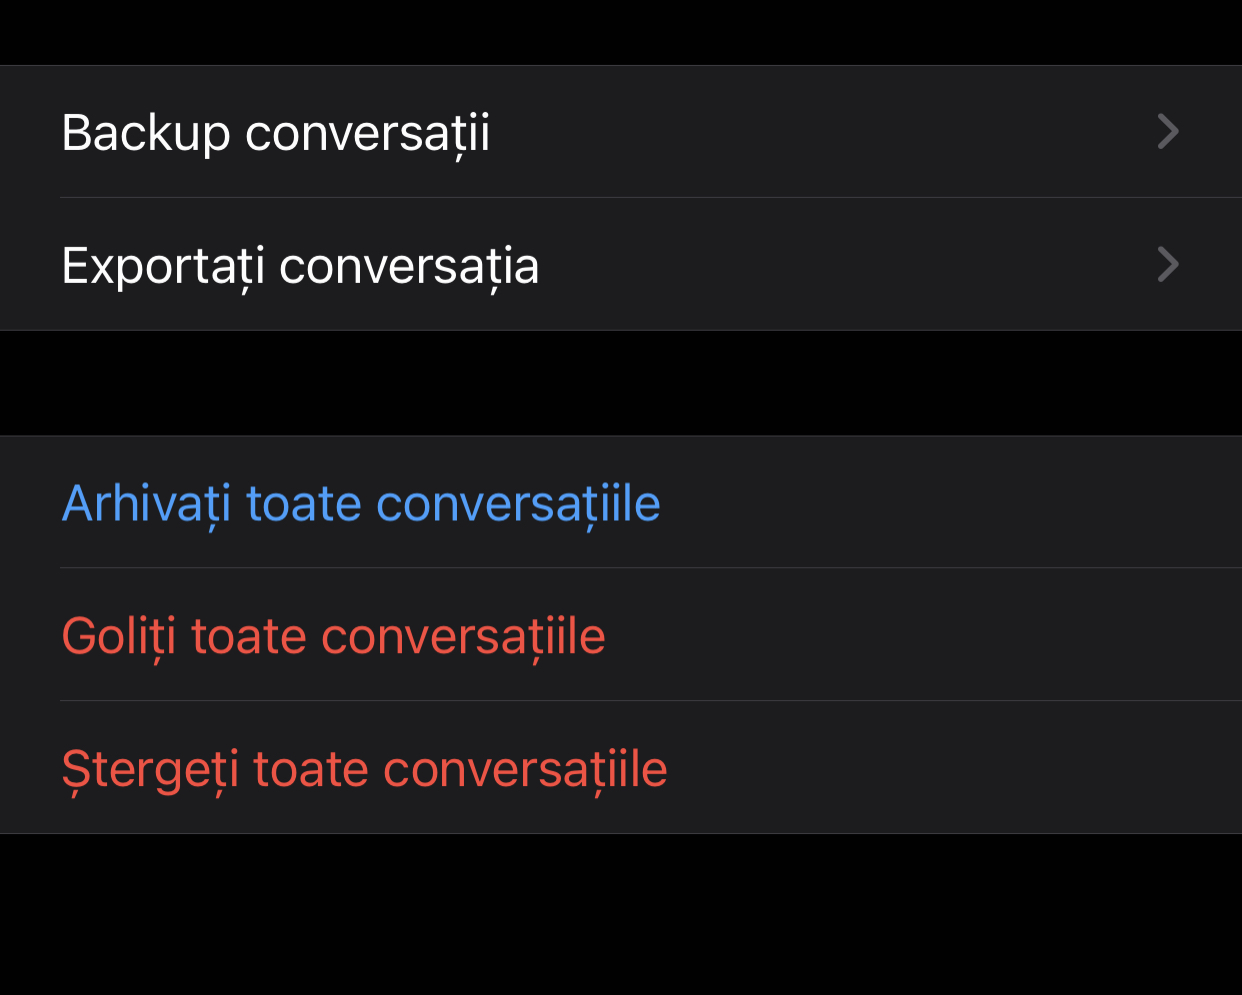 WhatsApp empty conversations